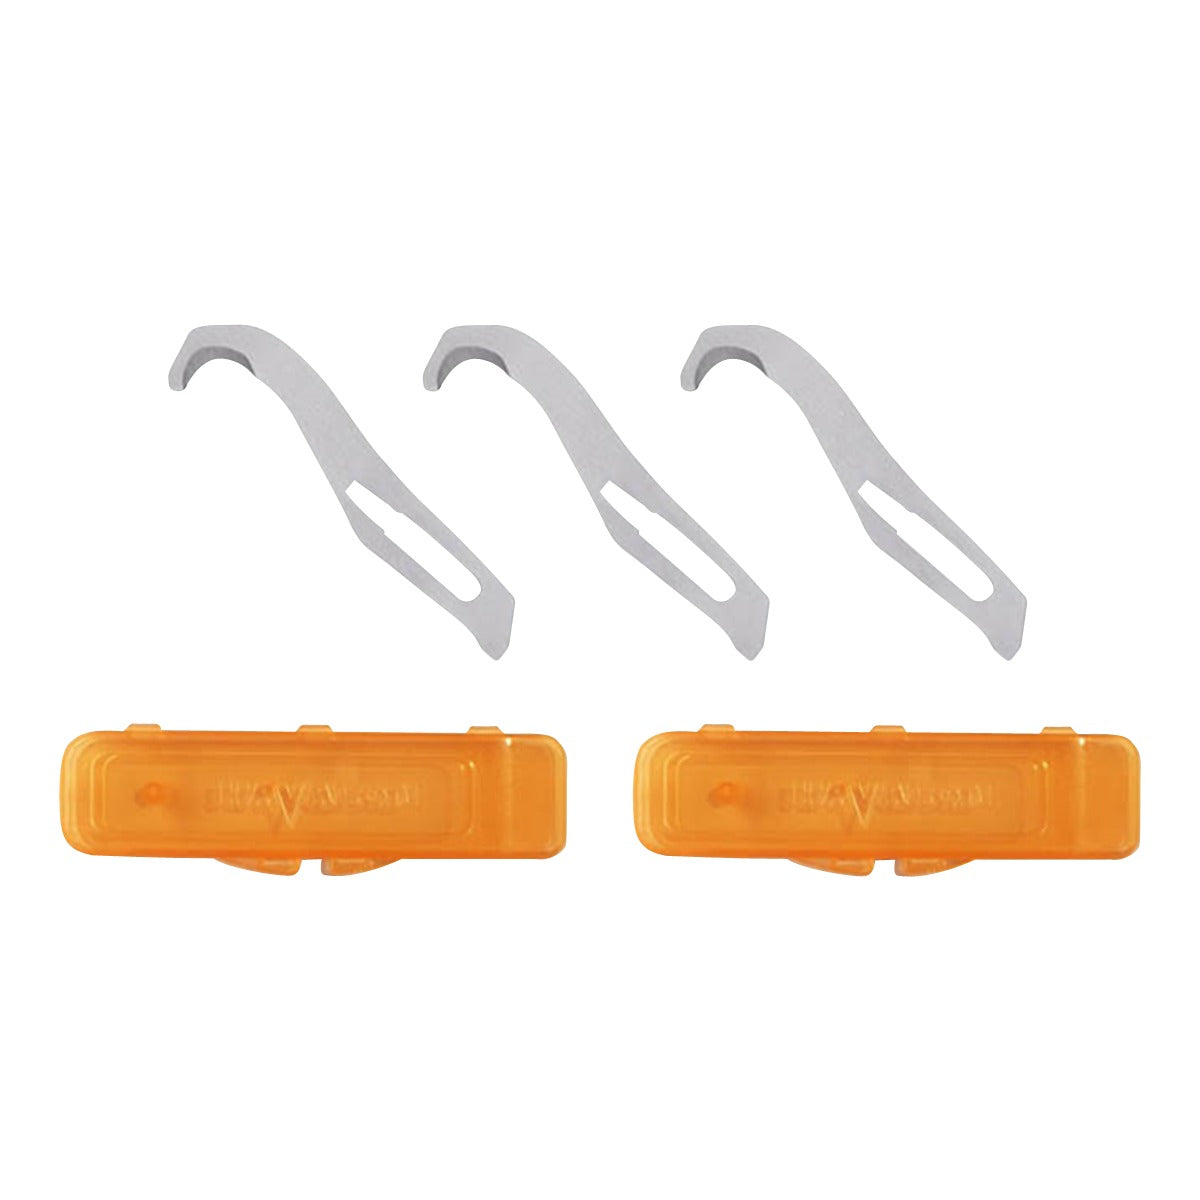 Havalon Piranta Gut Hook Replacement Blades - 3 Pack by Havalon Knives | Gear - goHUNT Shop